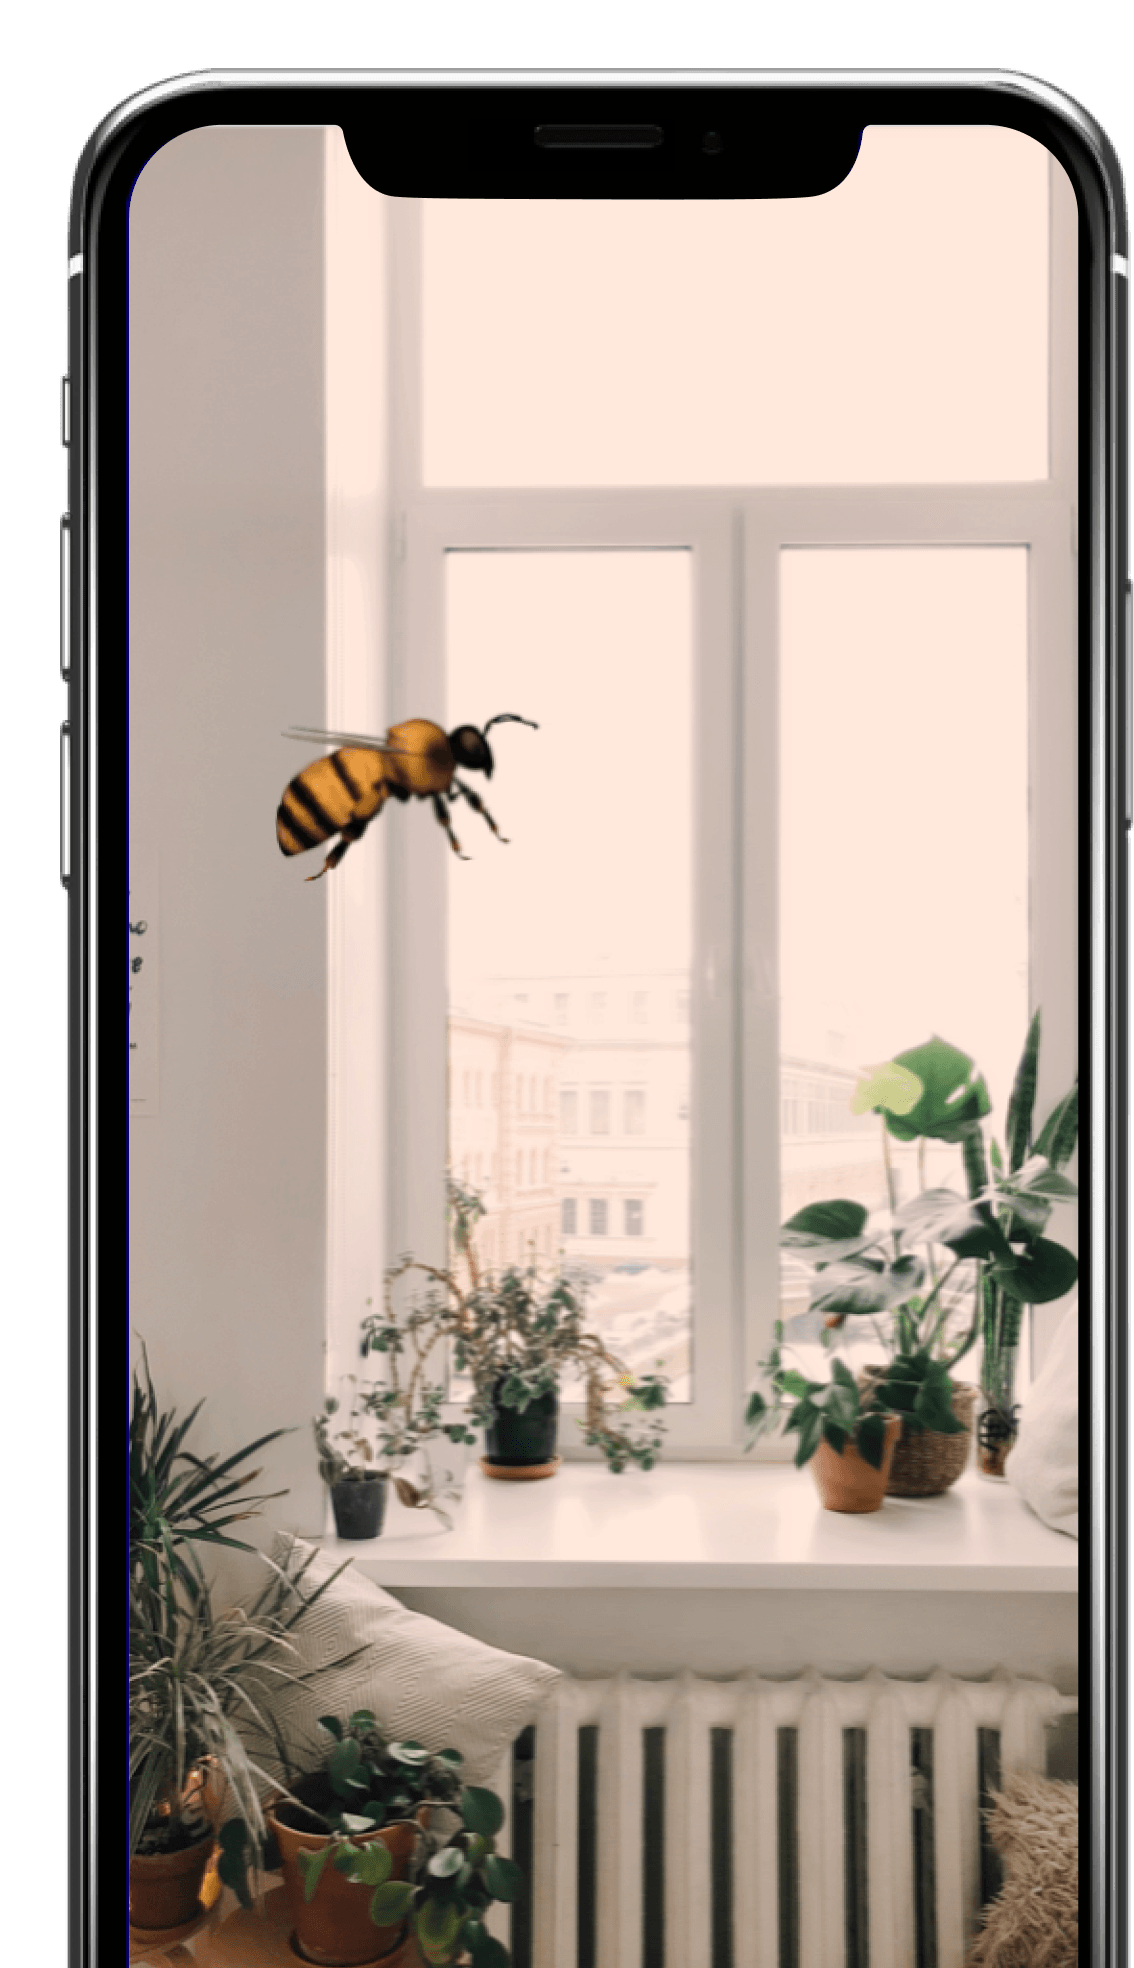 Bumblebee in real life using AR - indoors